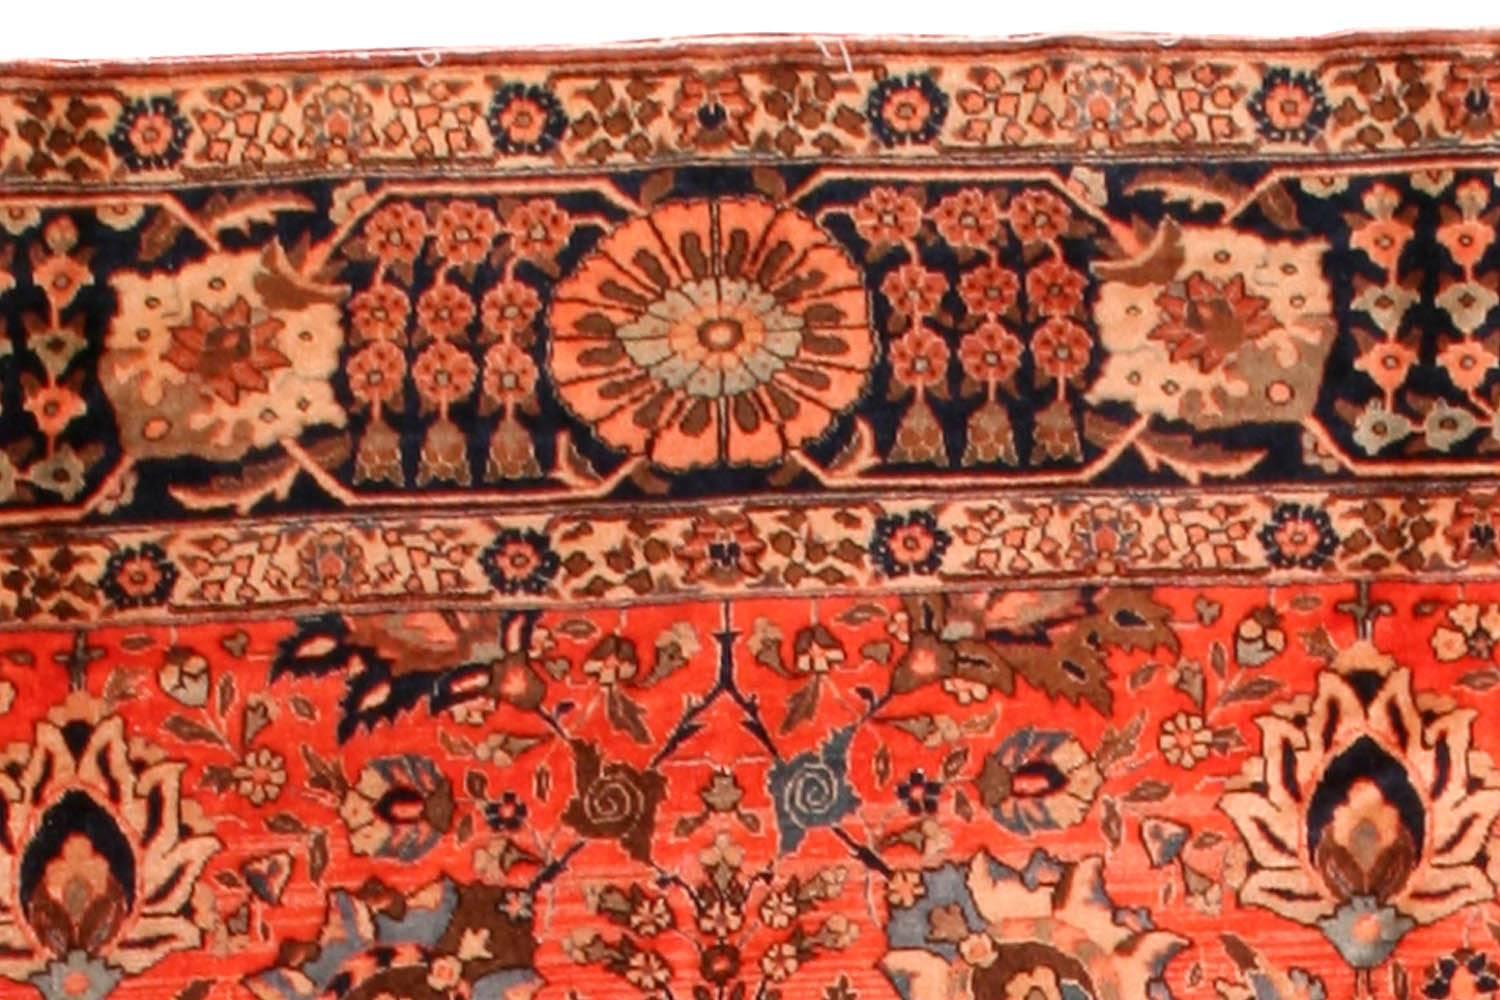 Hand-Woven Antique Persian Tabriz Rug